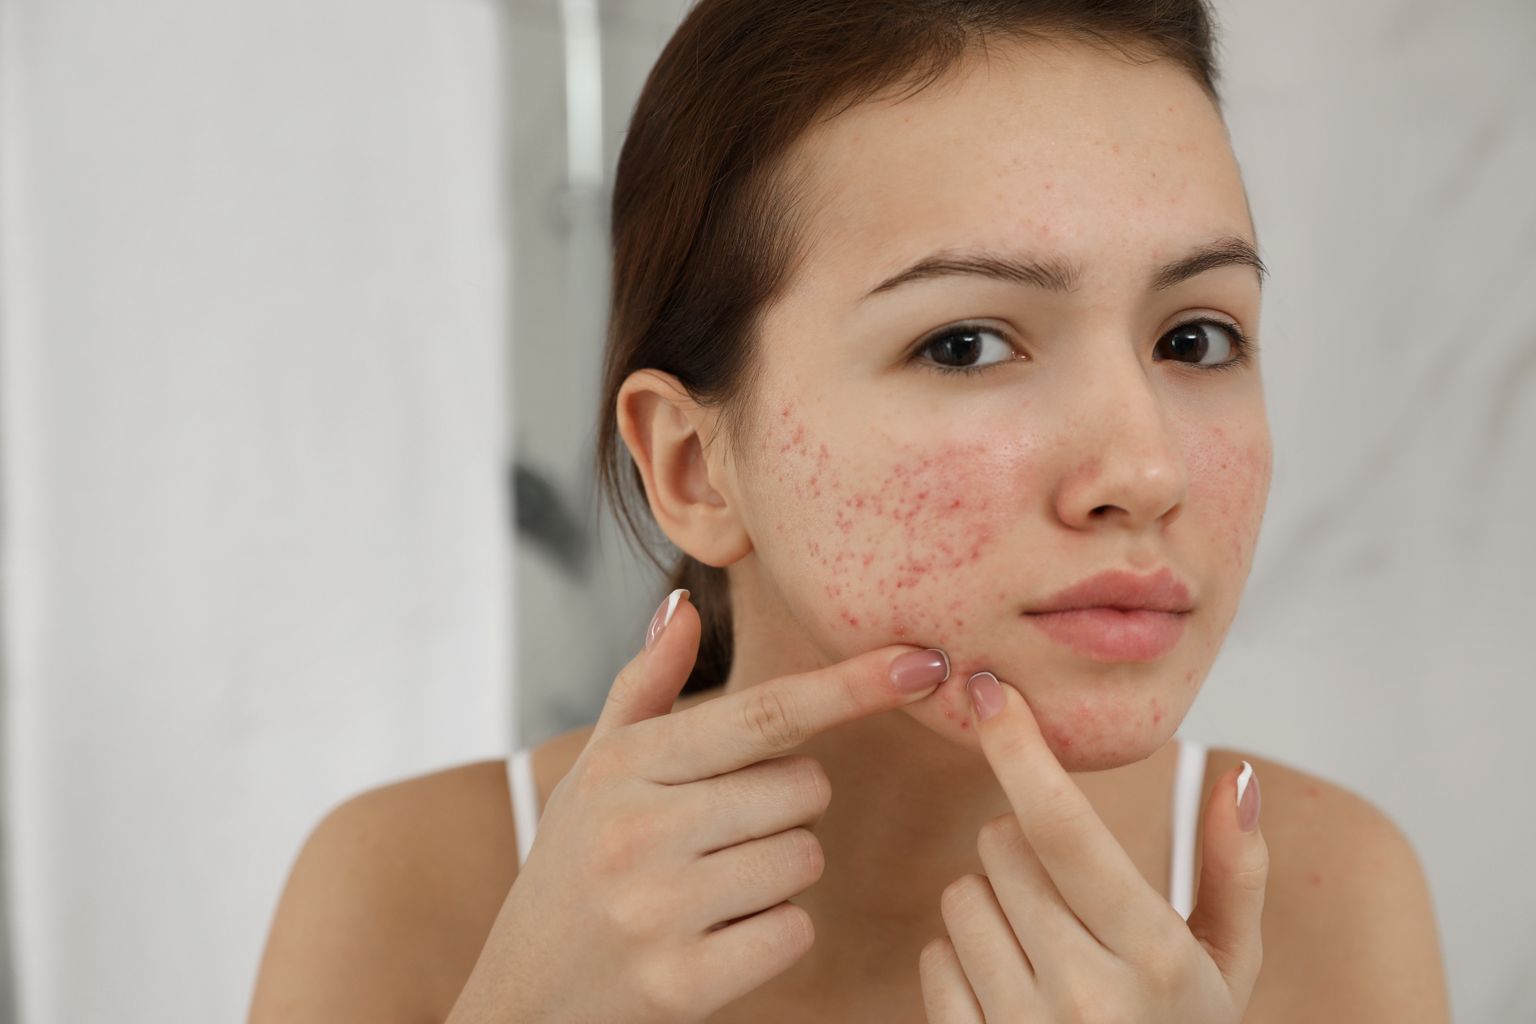 Menina adolescente com problemas de acne a espremer borbulha dentro de casa 